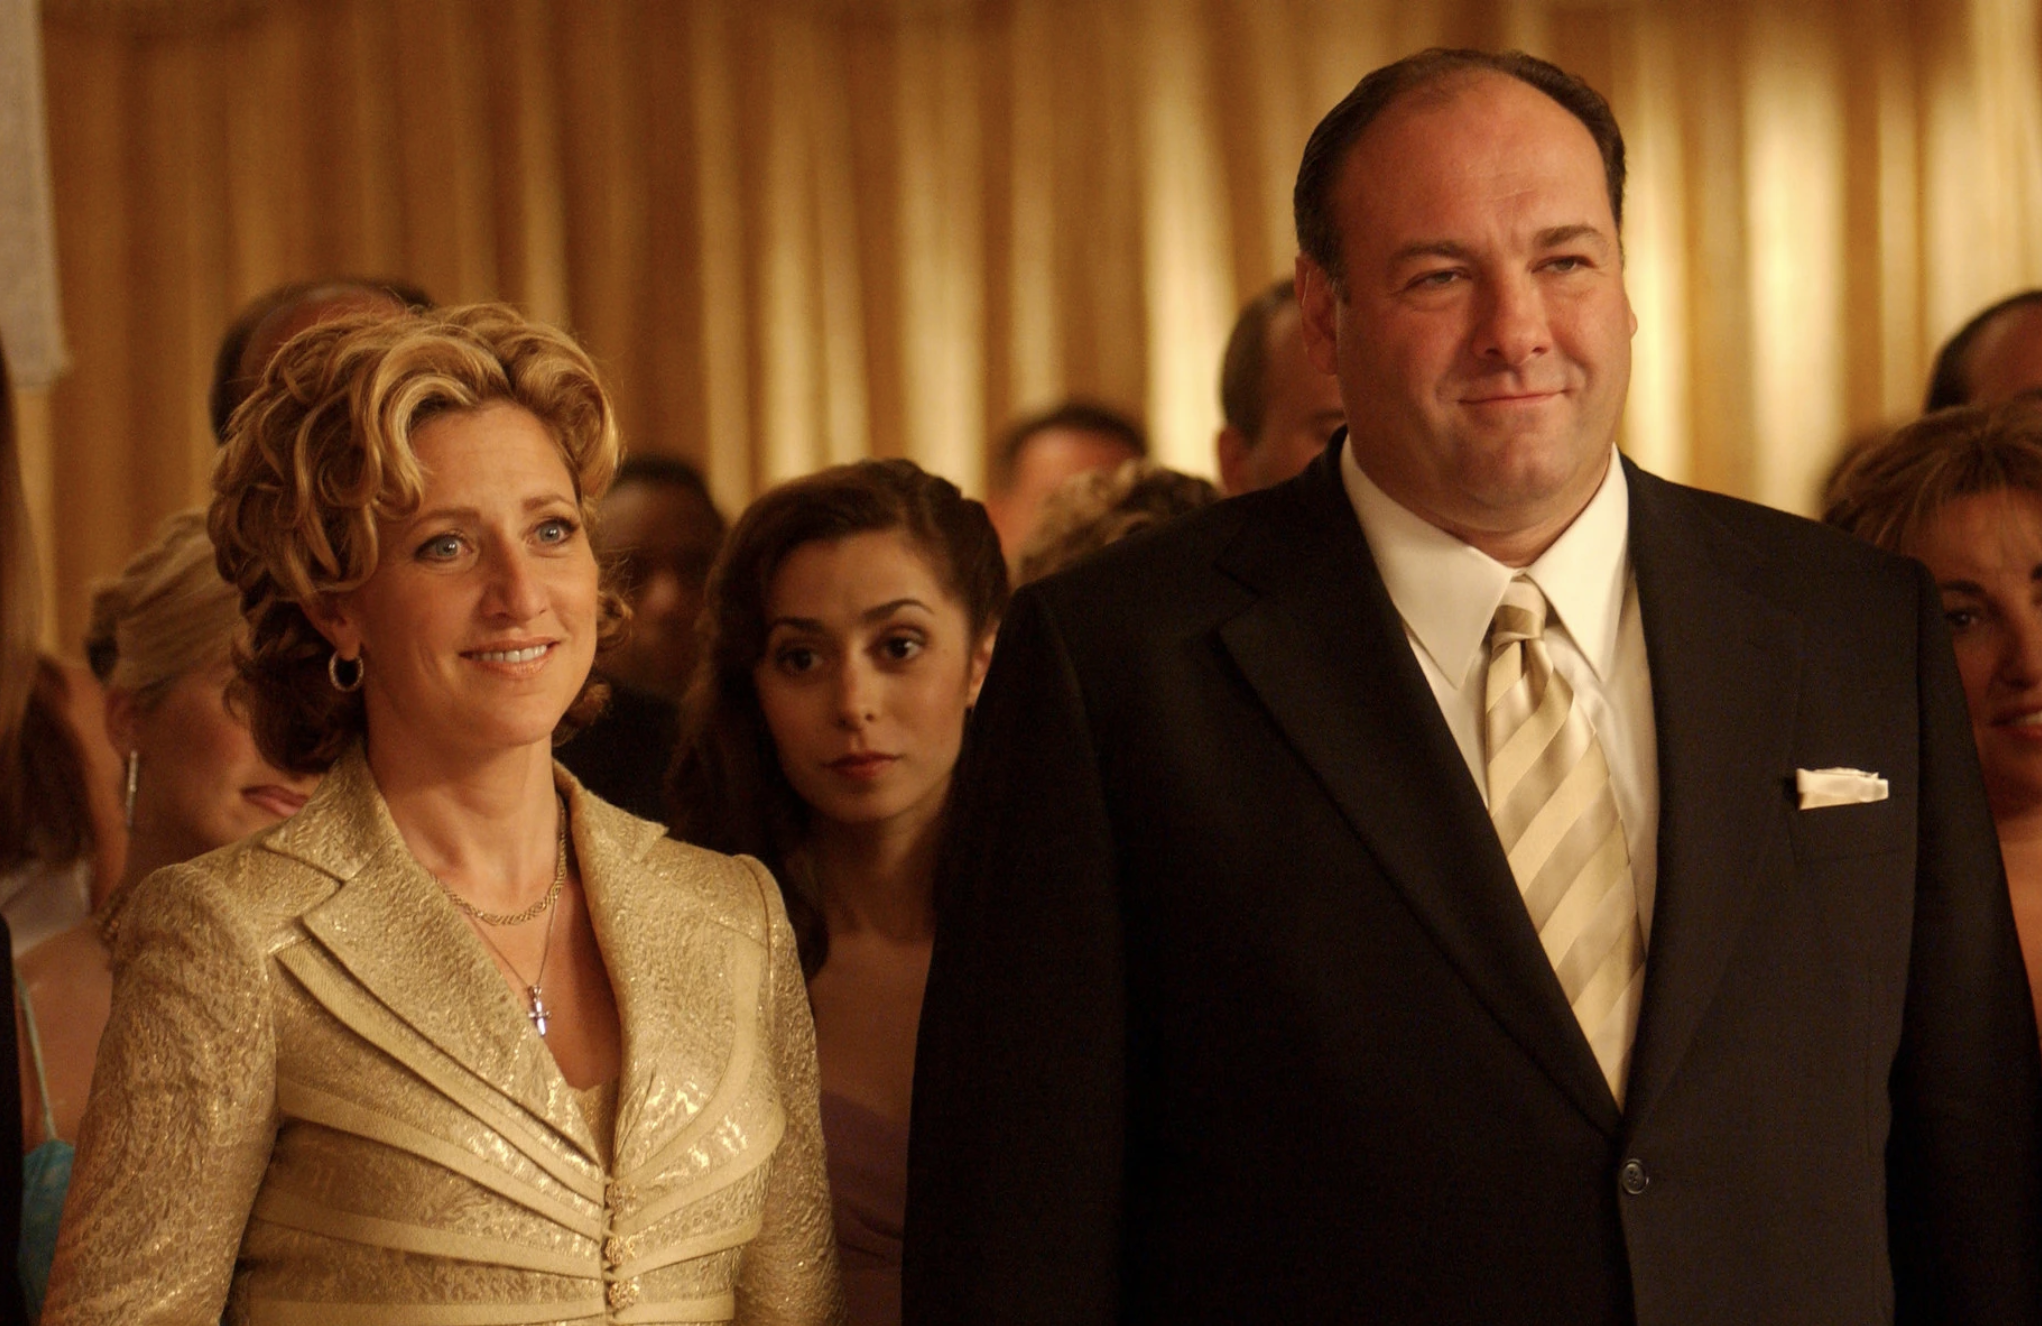 Edie Falco as Carmela Soprano and James Gandolfini as Tony Soprano at a public event in &quot;The Sopranos&quot;